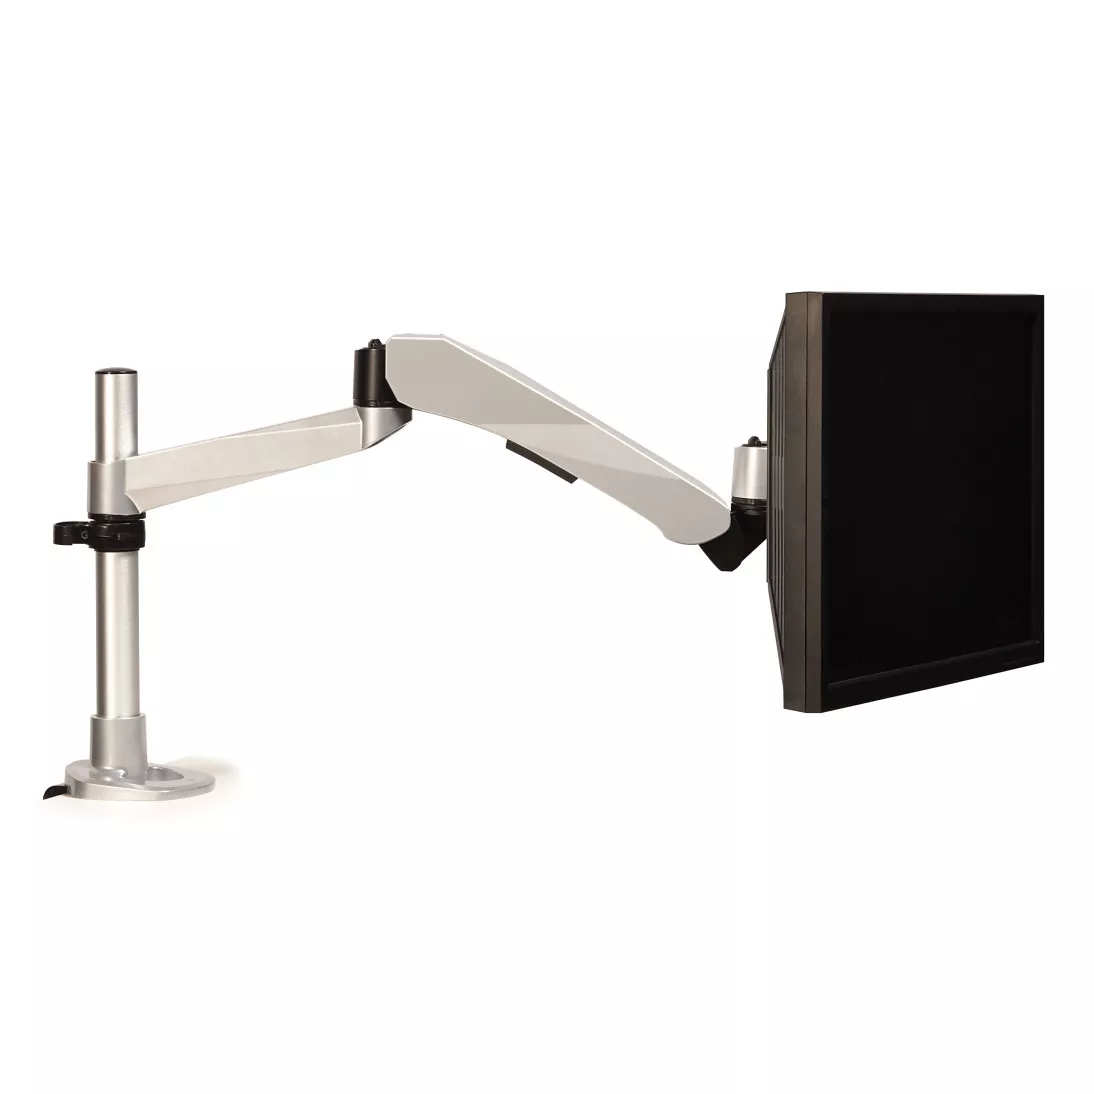 3M™ Easy Adjust Desk Mount Single Monitor Arm, Silver, MA245S